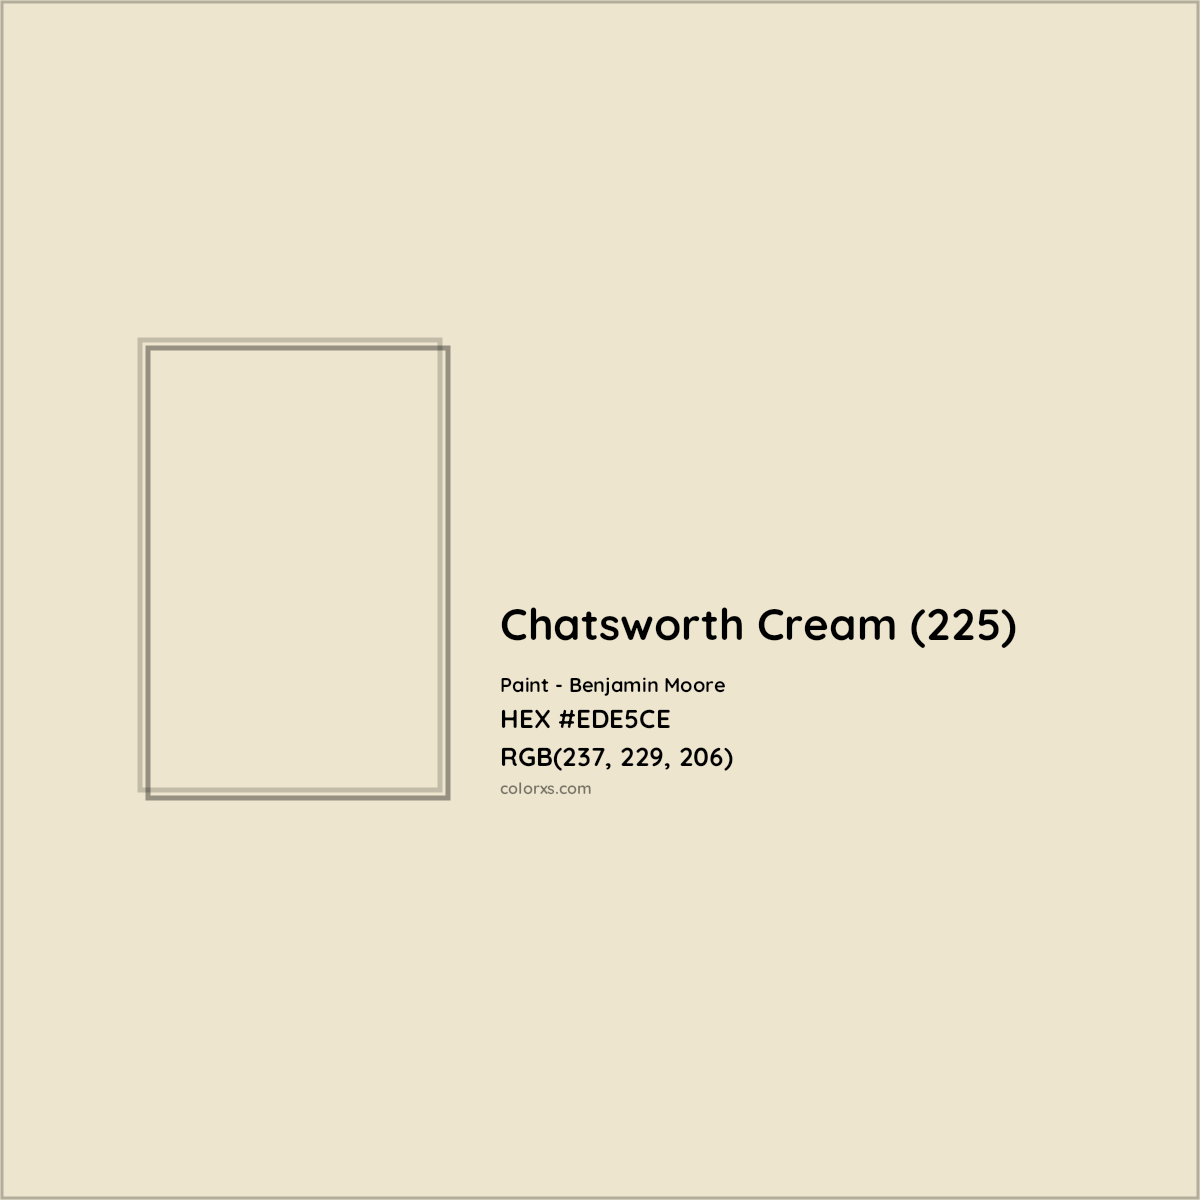 HEX #EDE5CE Chatsworth Cream (225) Paint Benjamin Moore - Color Code